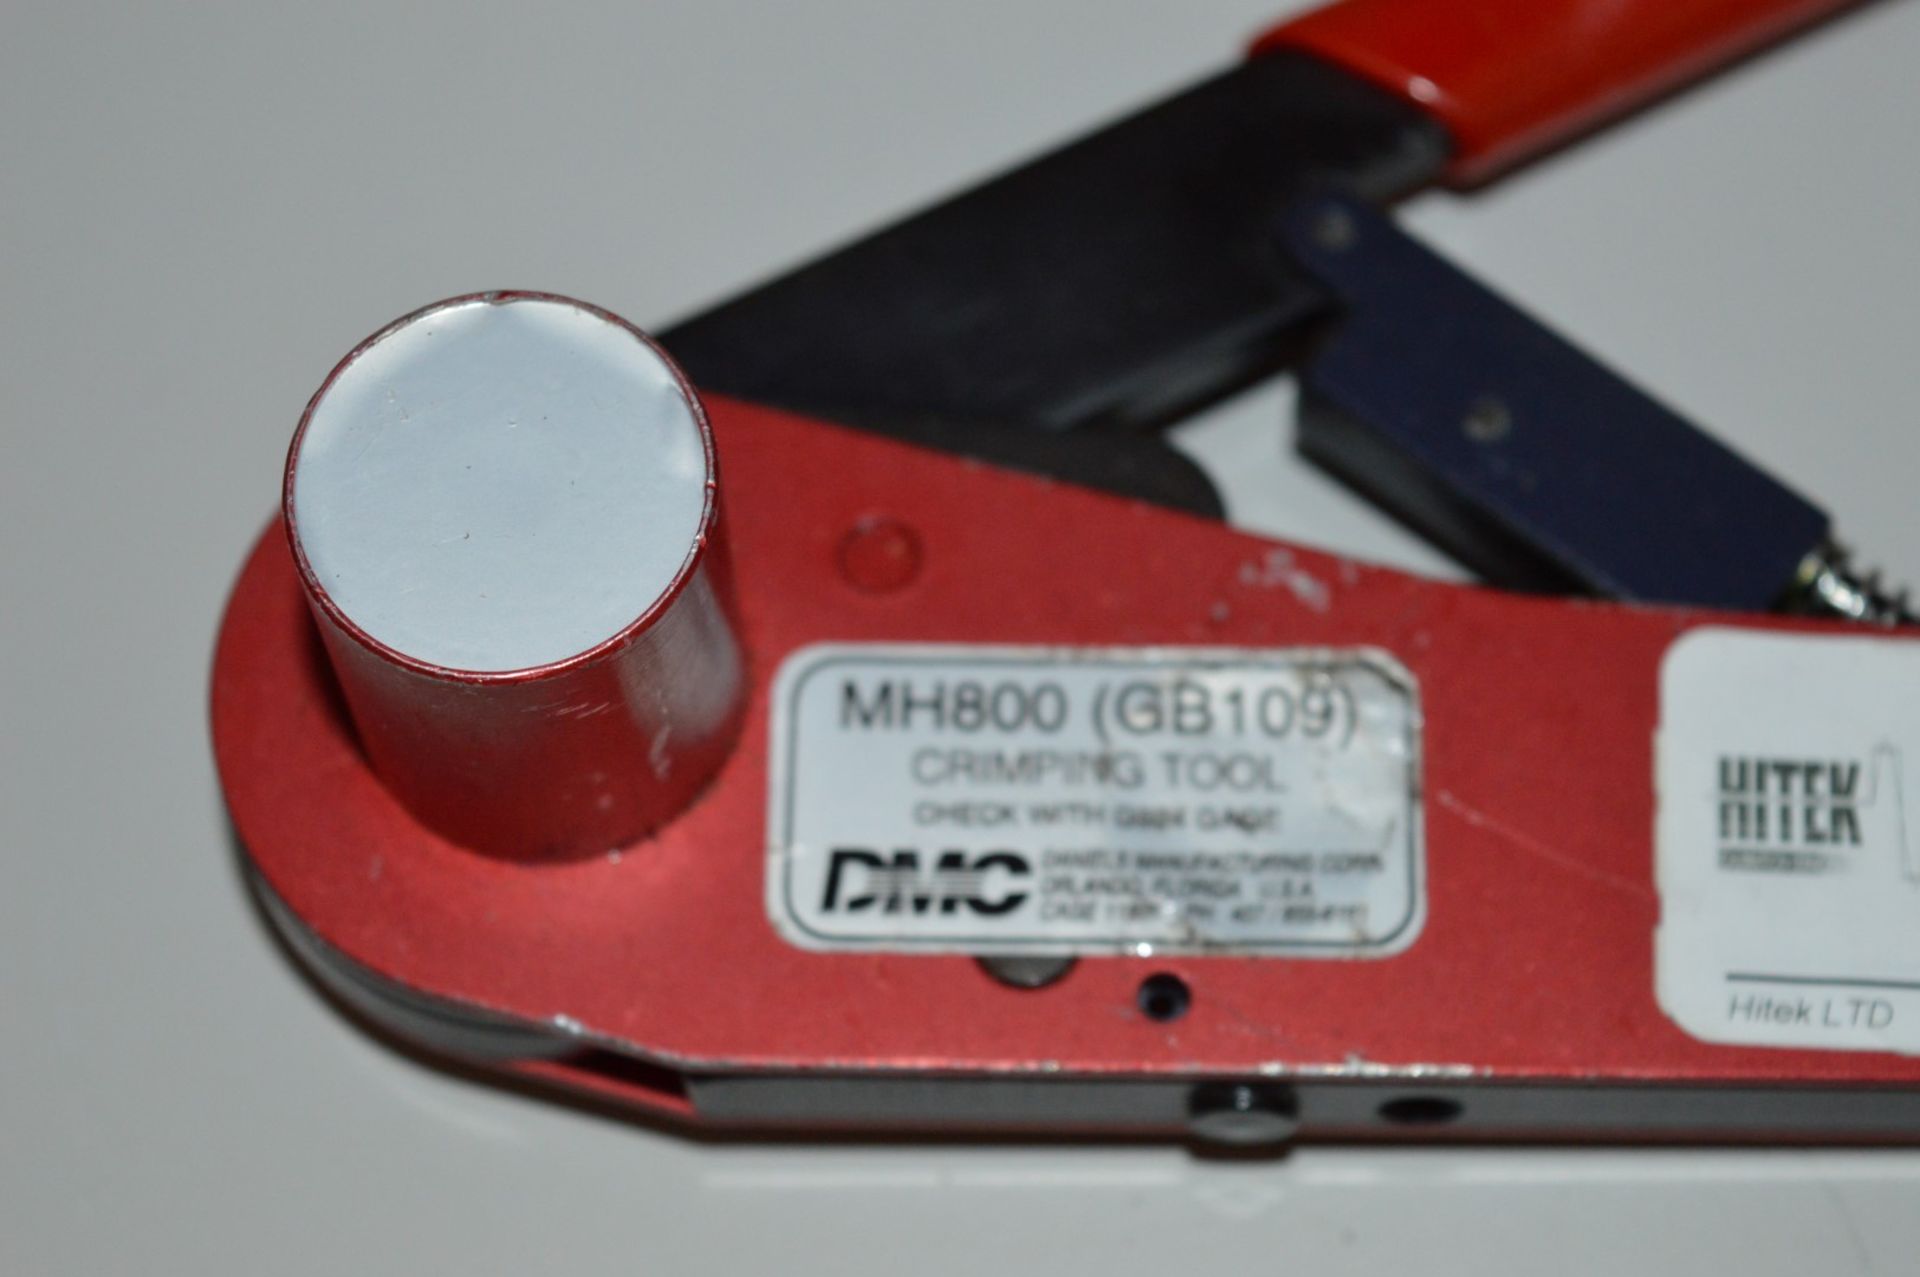 1 x DMC Crimp Tool MH800 (GB109) - Calibarated Until 21st March 2016 - Ultra precision crimp tool - Image 3 of 5